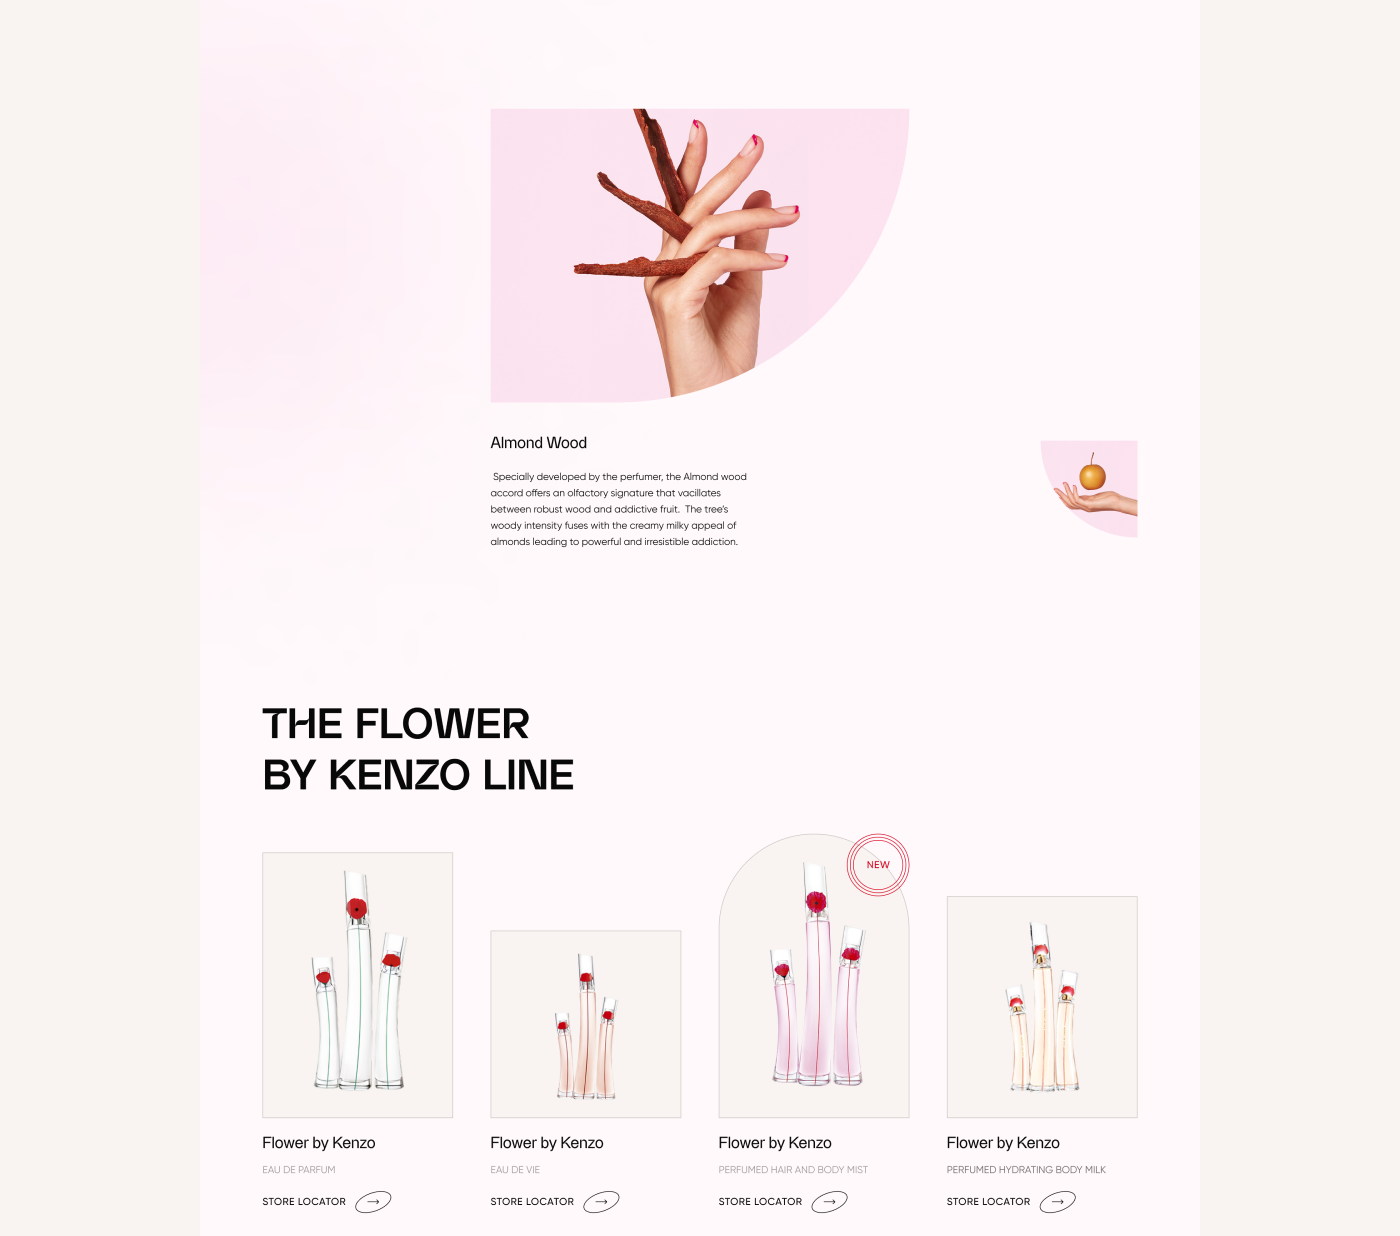 UI ux Web Design  concept e-commerce kenzo parfums promo redesign Fashion 